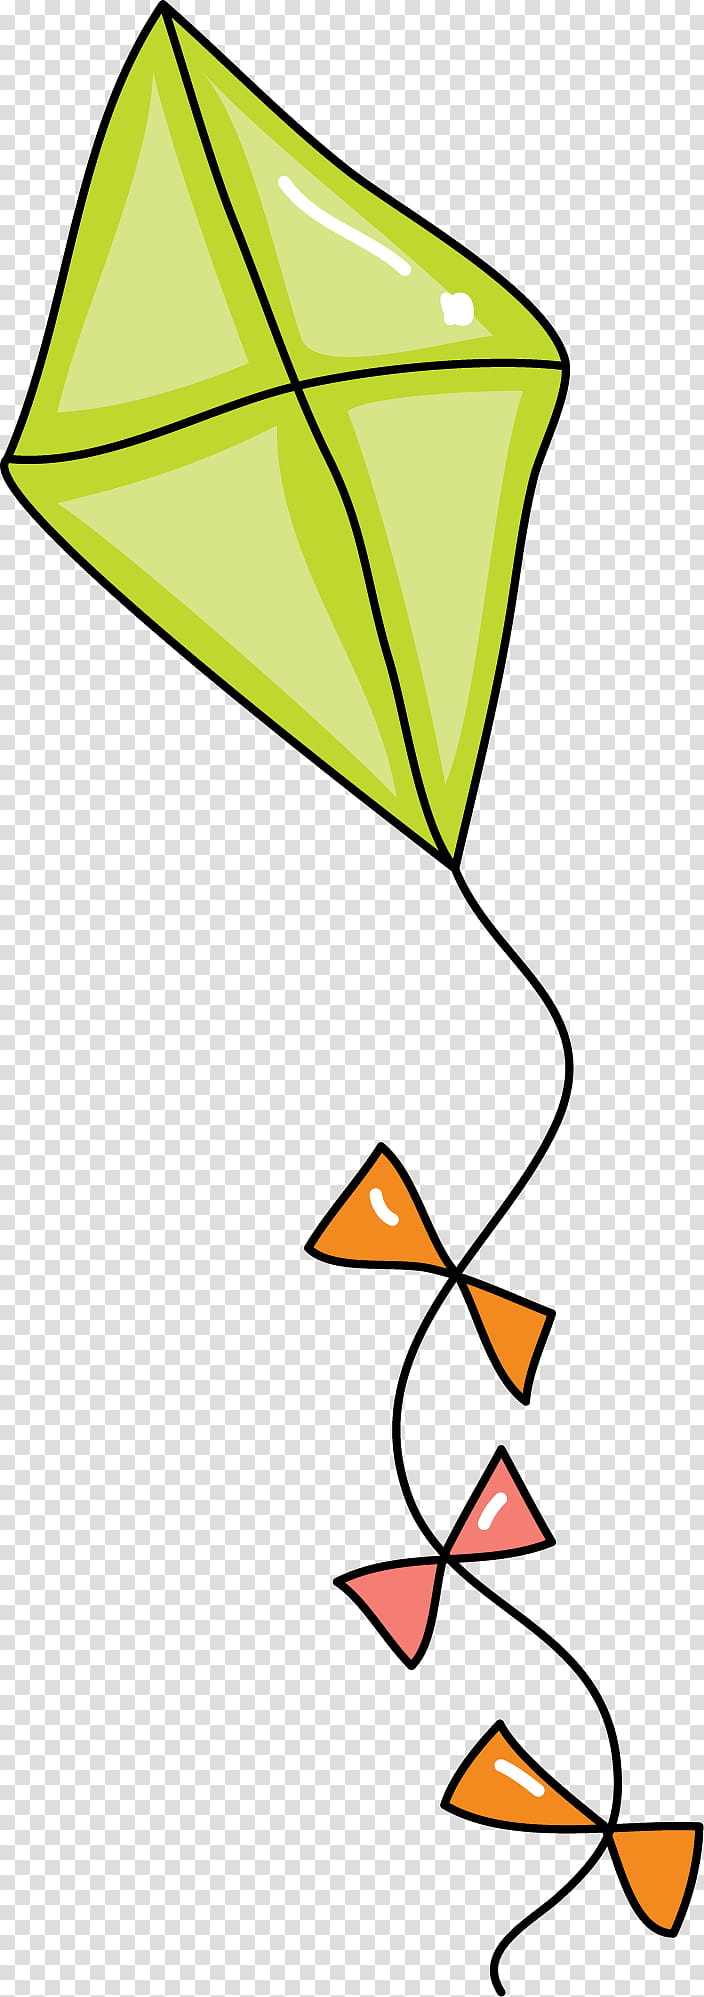 Look UP FREE set, green kite illustration transparent background PNG clipart